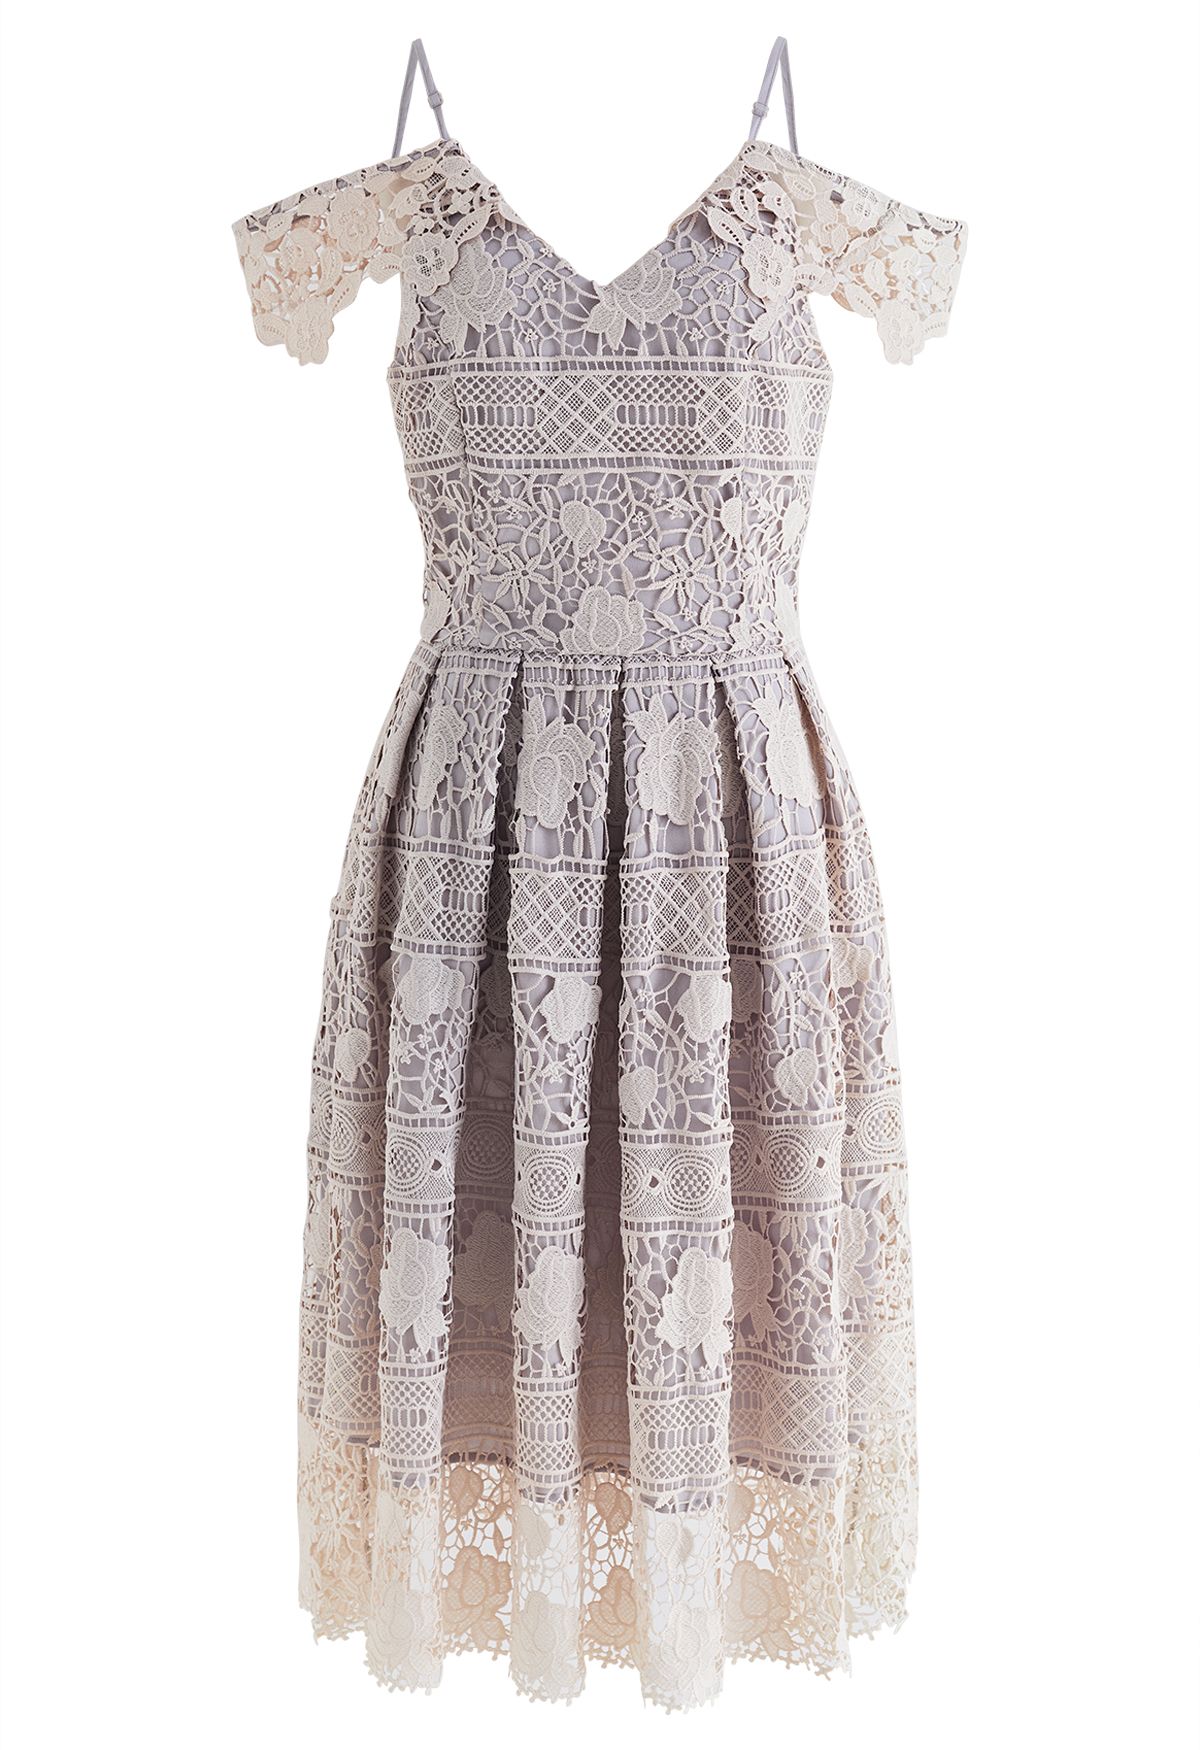 Delicate Crochet Cold-Shoulder Dress - Retro, Indie and Unique Fashion